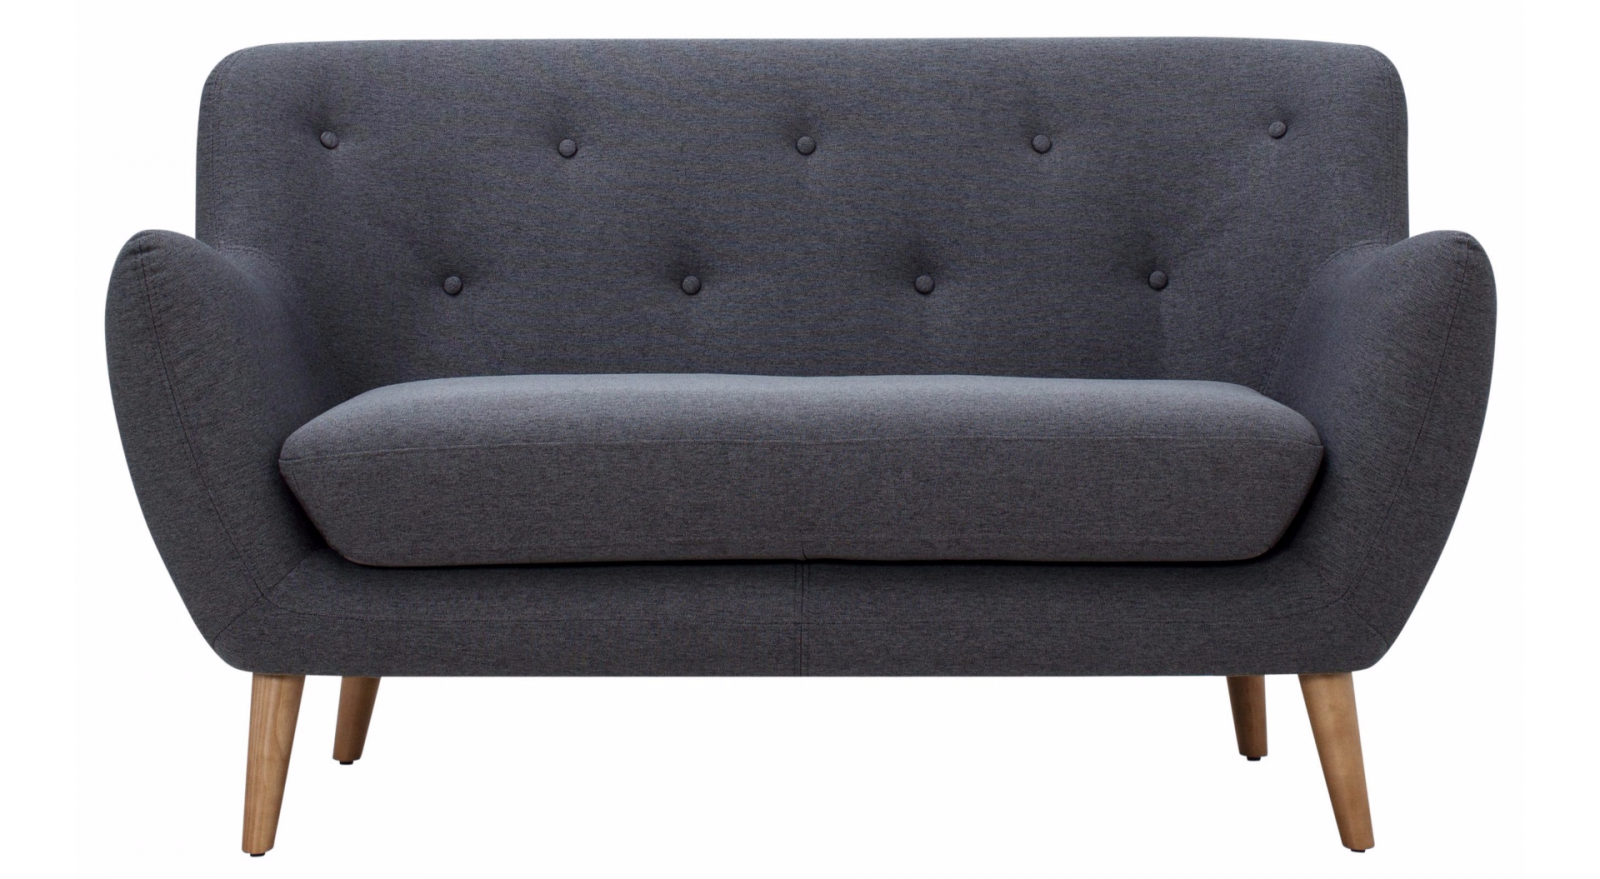 Scandinavian style designer sofa rental for two people